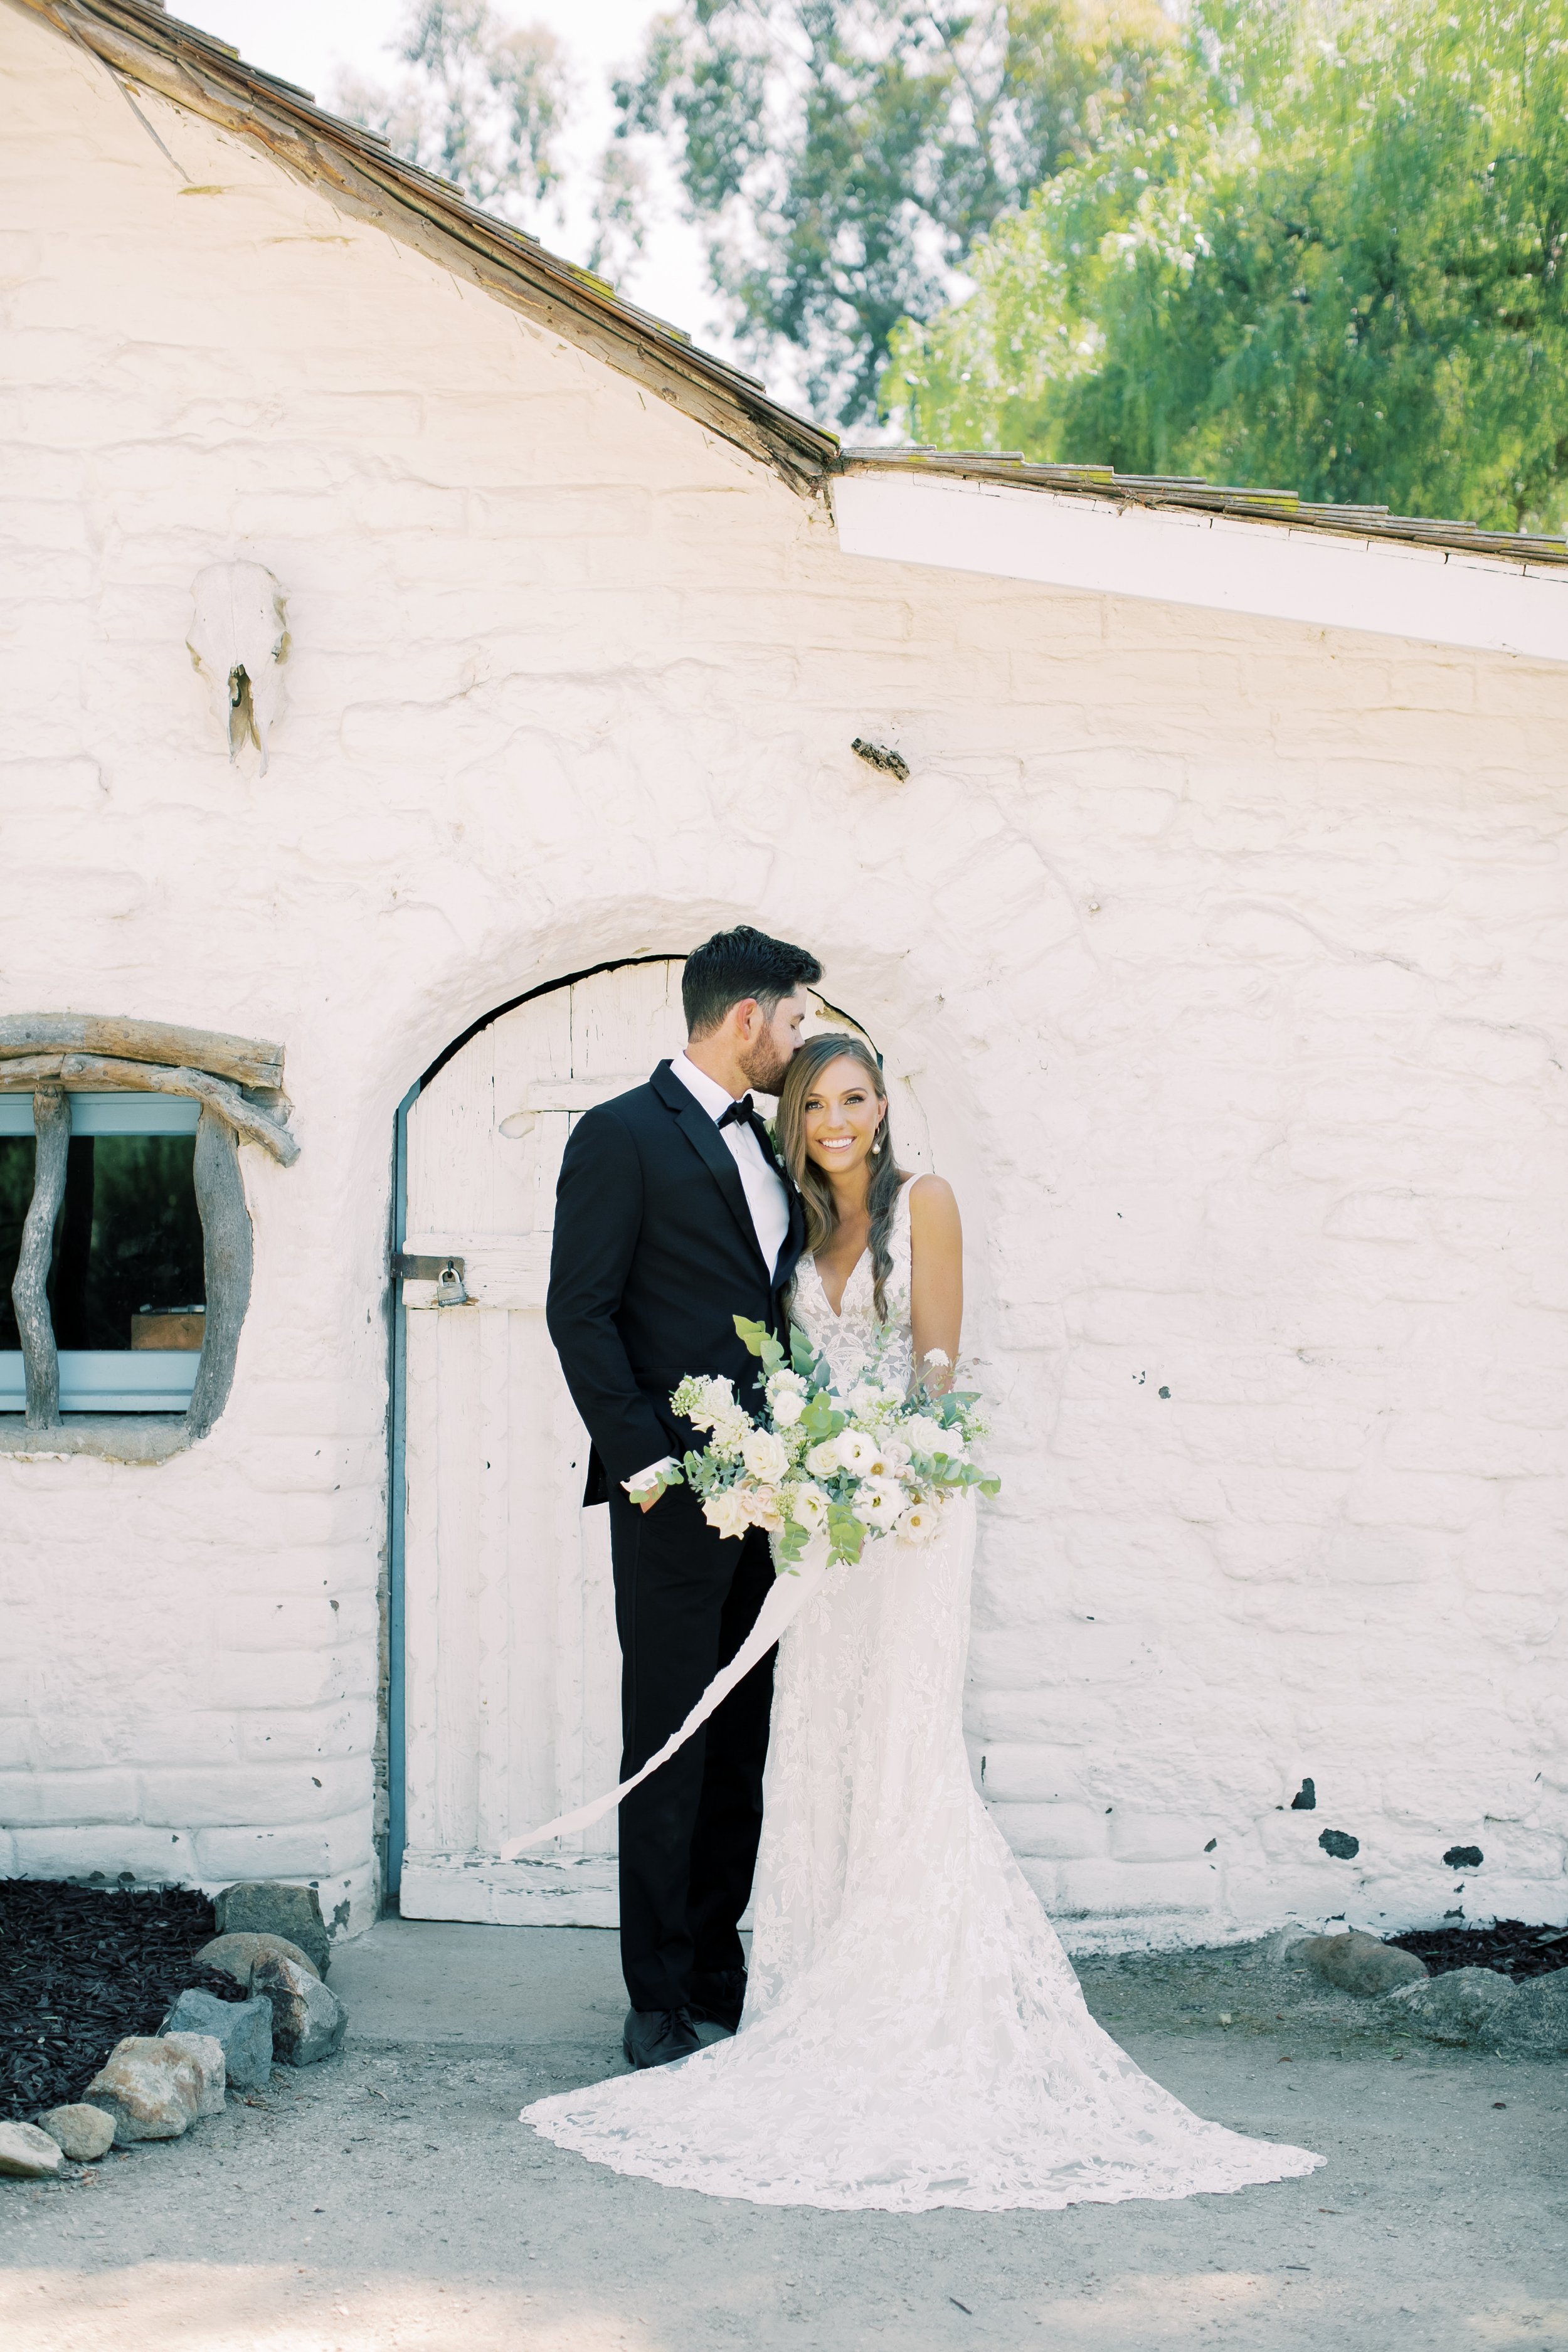 Romantics - Austin + Alexis' Wedding - Natalie Schutt Photography-32.jpg